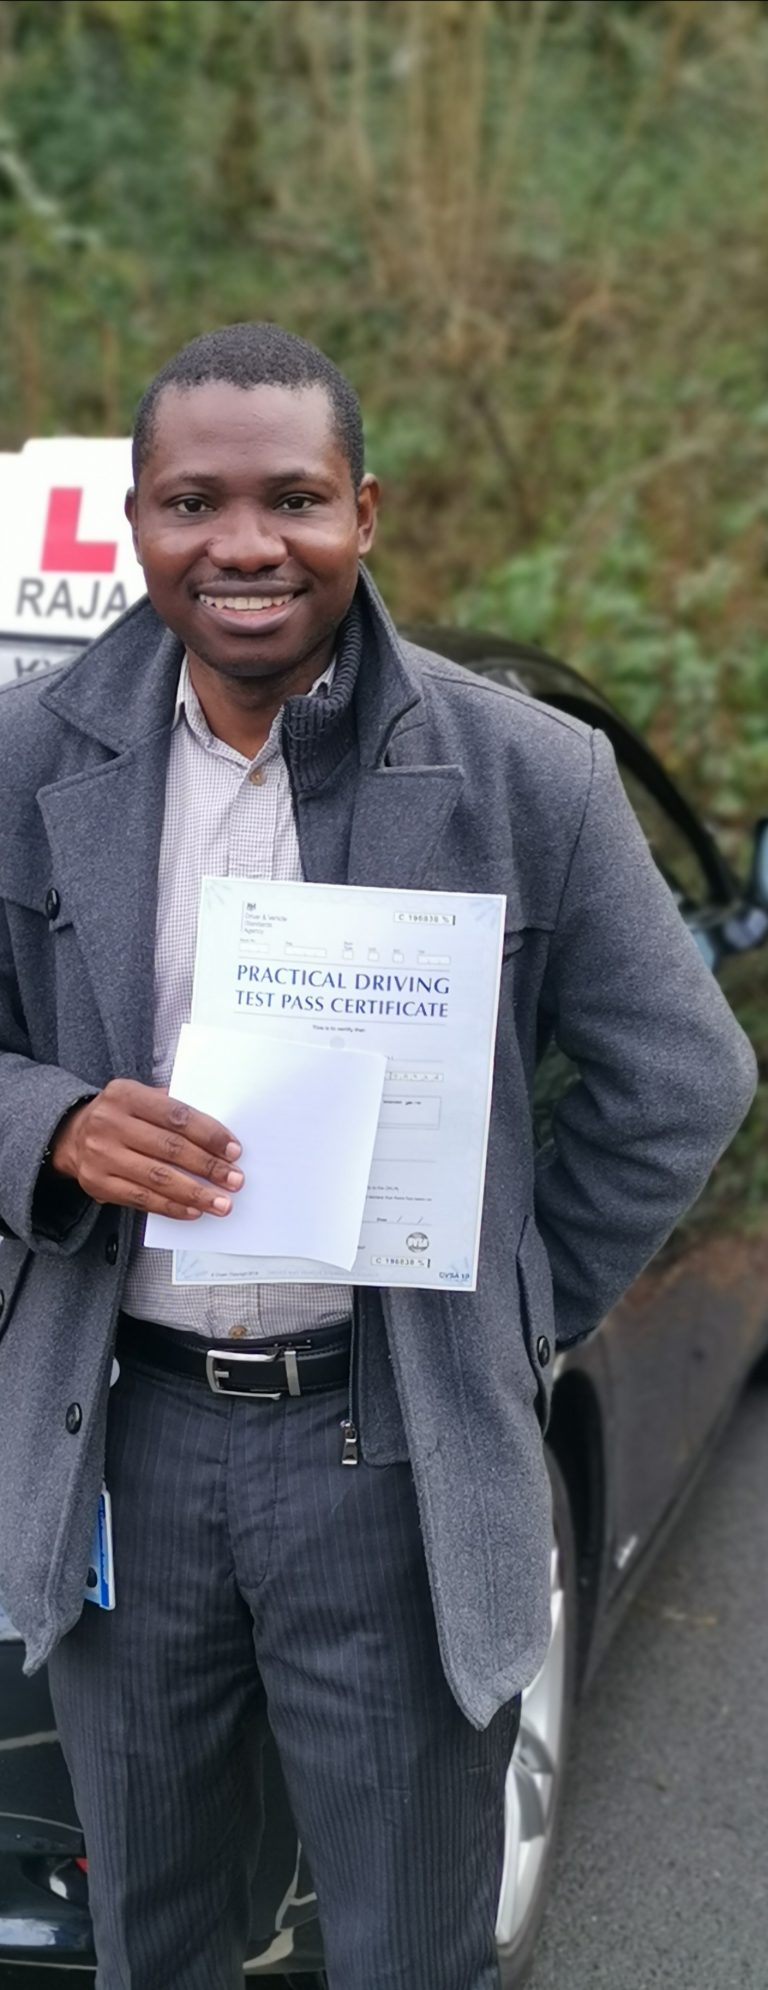 Pass-Automatic-driving-test-Blackburn-Darwen-Driving-Lessons-Blackburn-Driving-instructor-Blackburn-Manual-Driving-Instructor-Blackburn-Accrington-Pass-plus-Motorway-lessons-Crash-Course